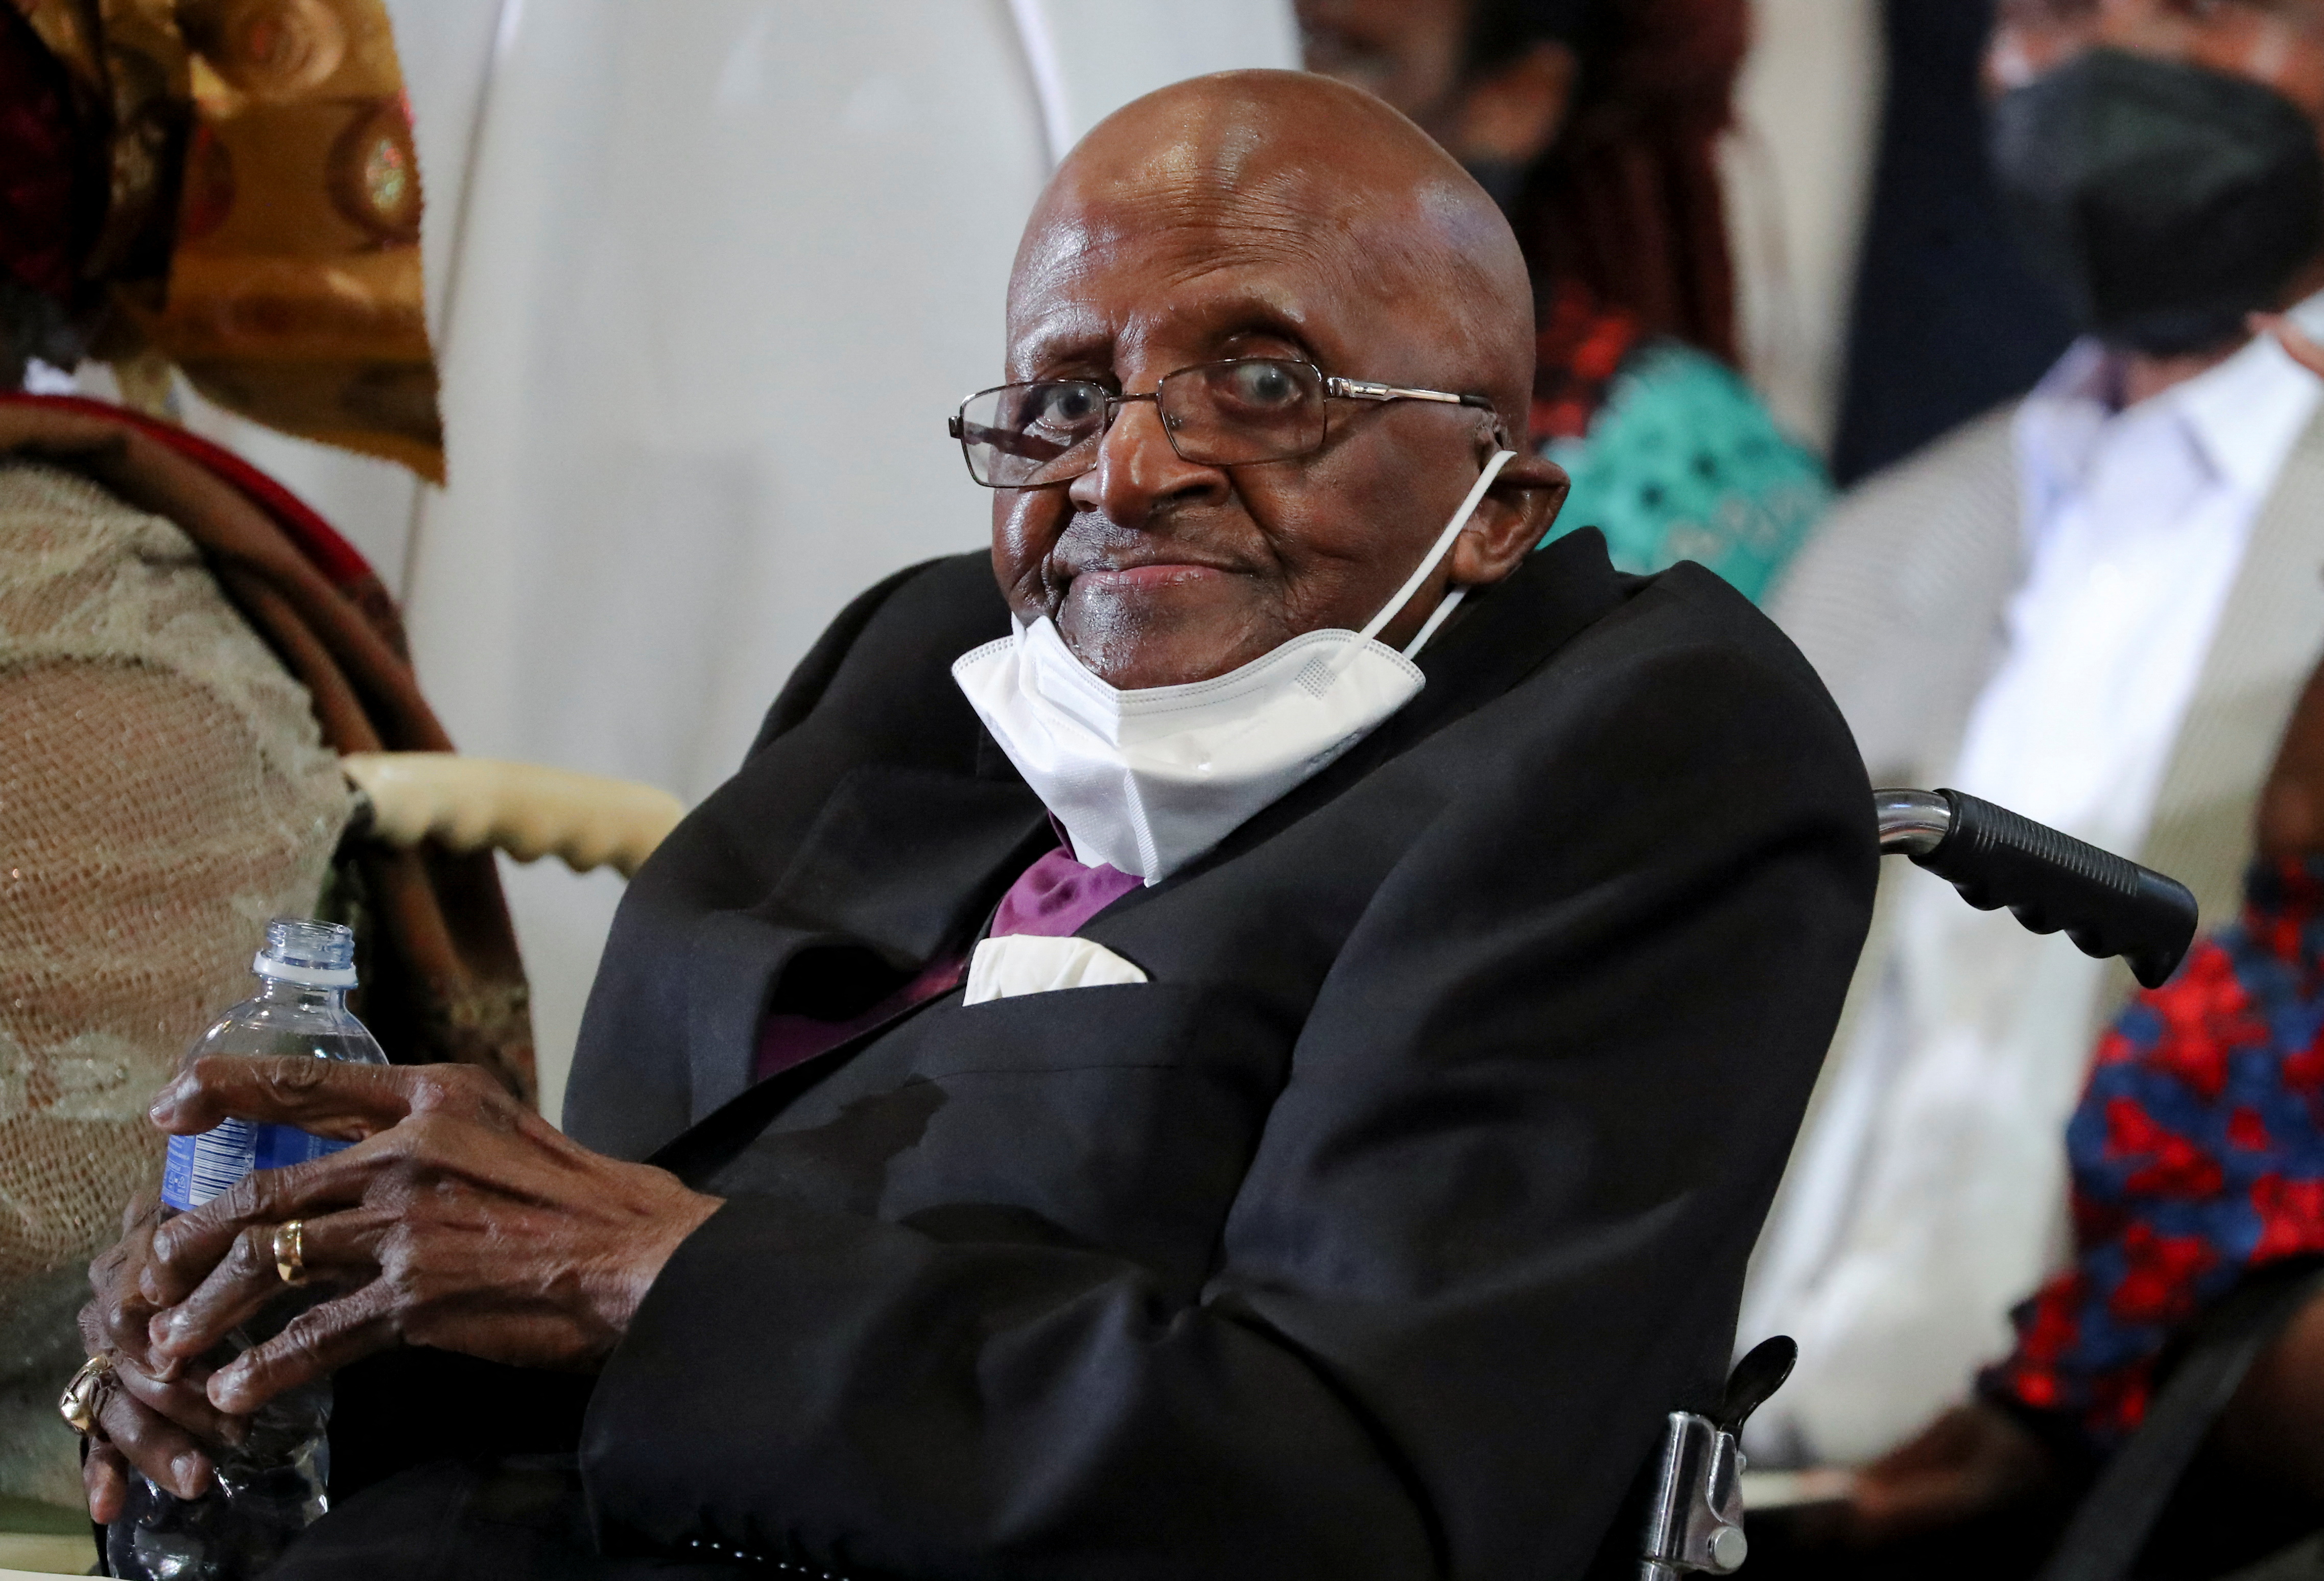 Archbishop Emeritus Desmond Tutu's 90th birthday, in Cape Town